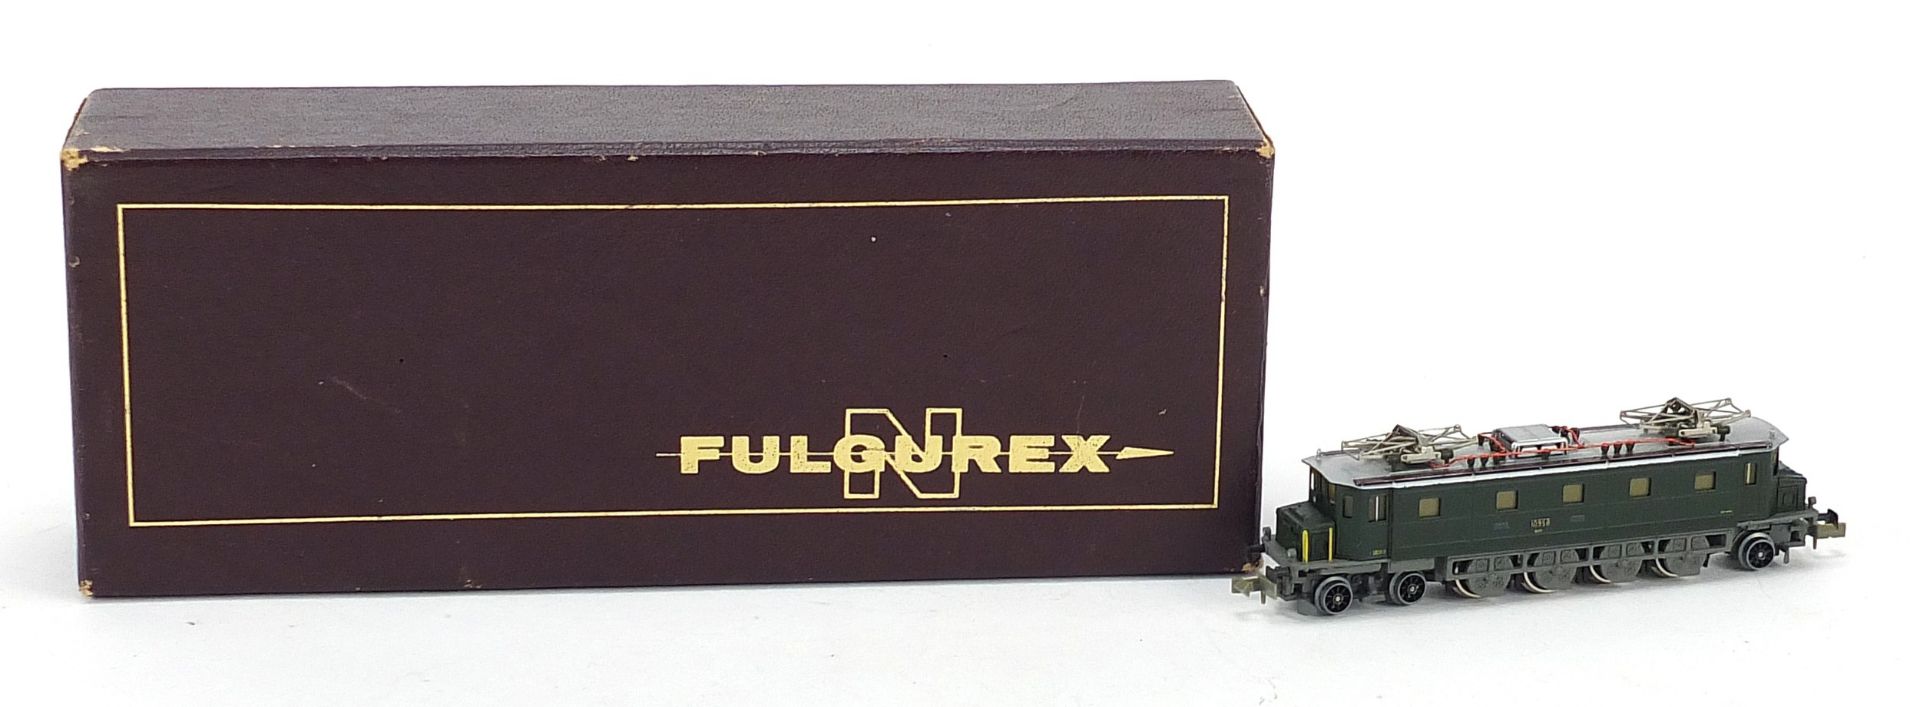 Fulgurex N gauge model railway locomotive with box, numbered SBB AE4/7 10958